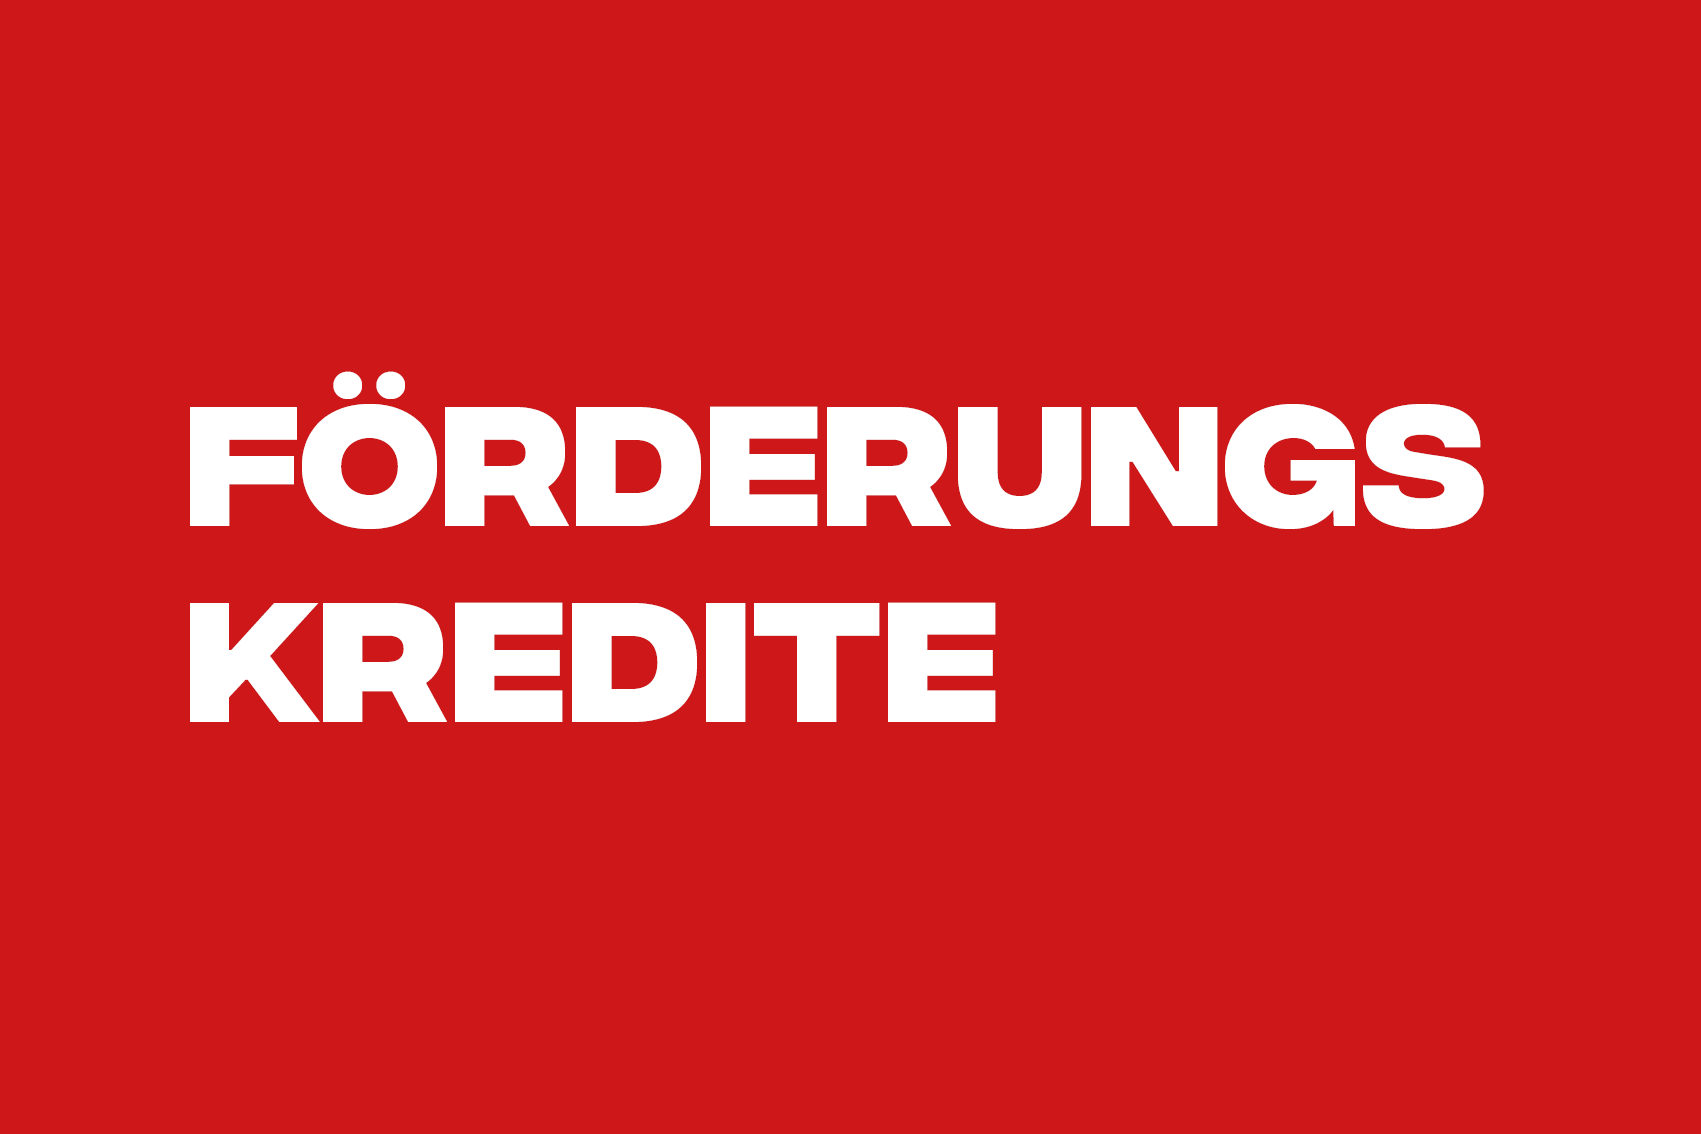 Vorarlberg transparent - Förderungskredite